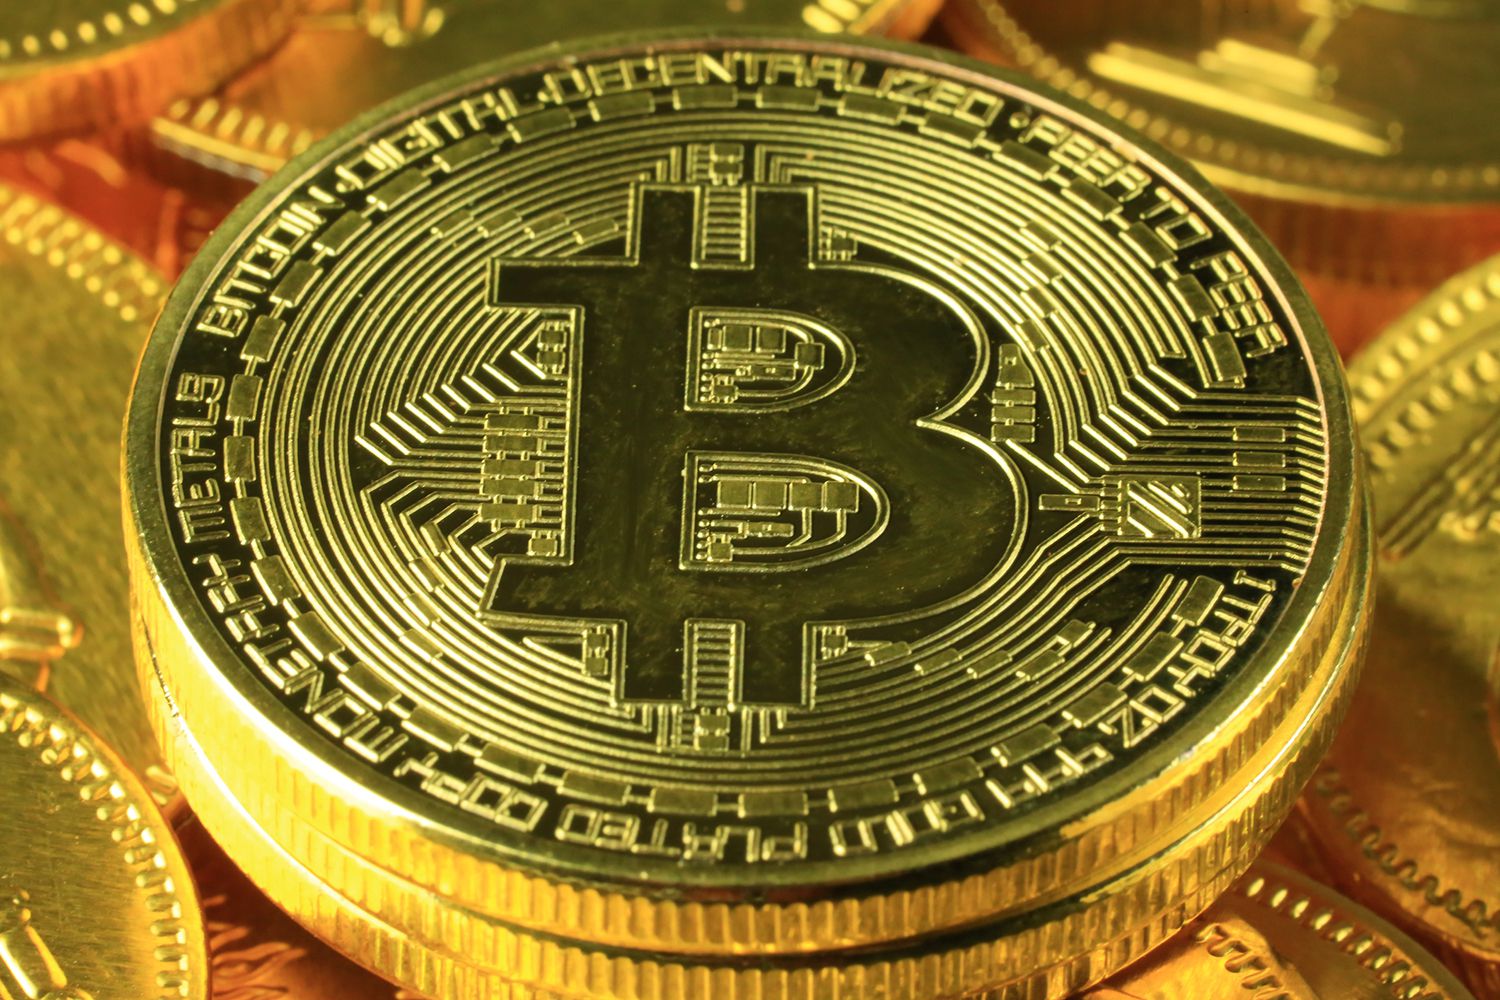 Where can you use Bitcoin?